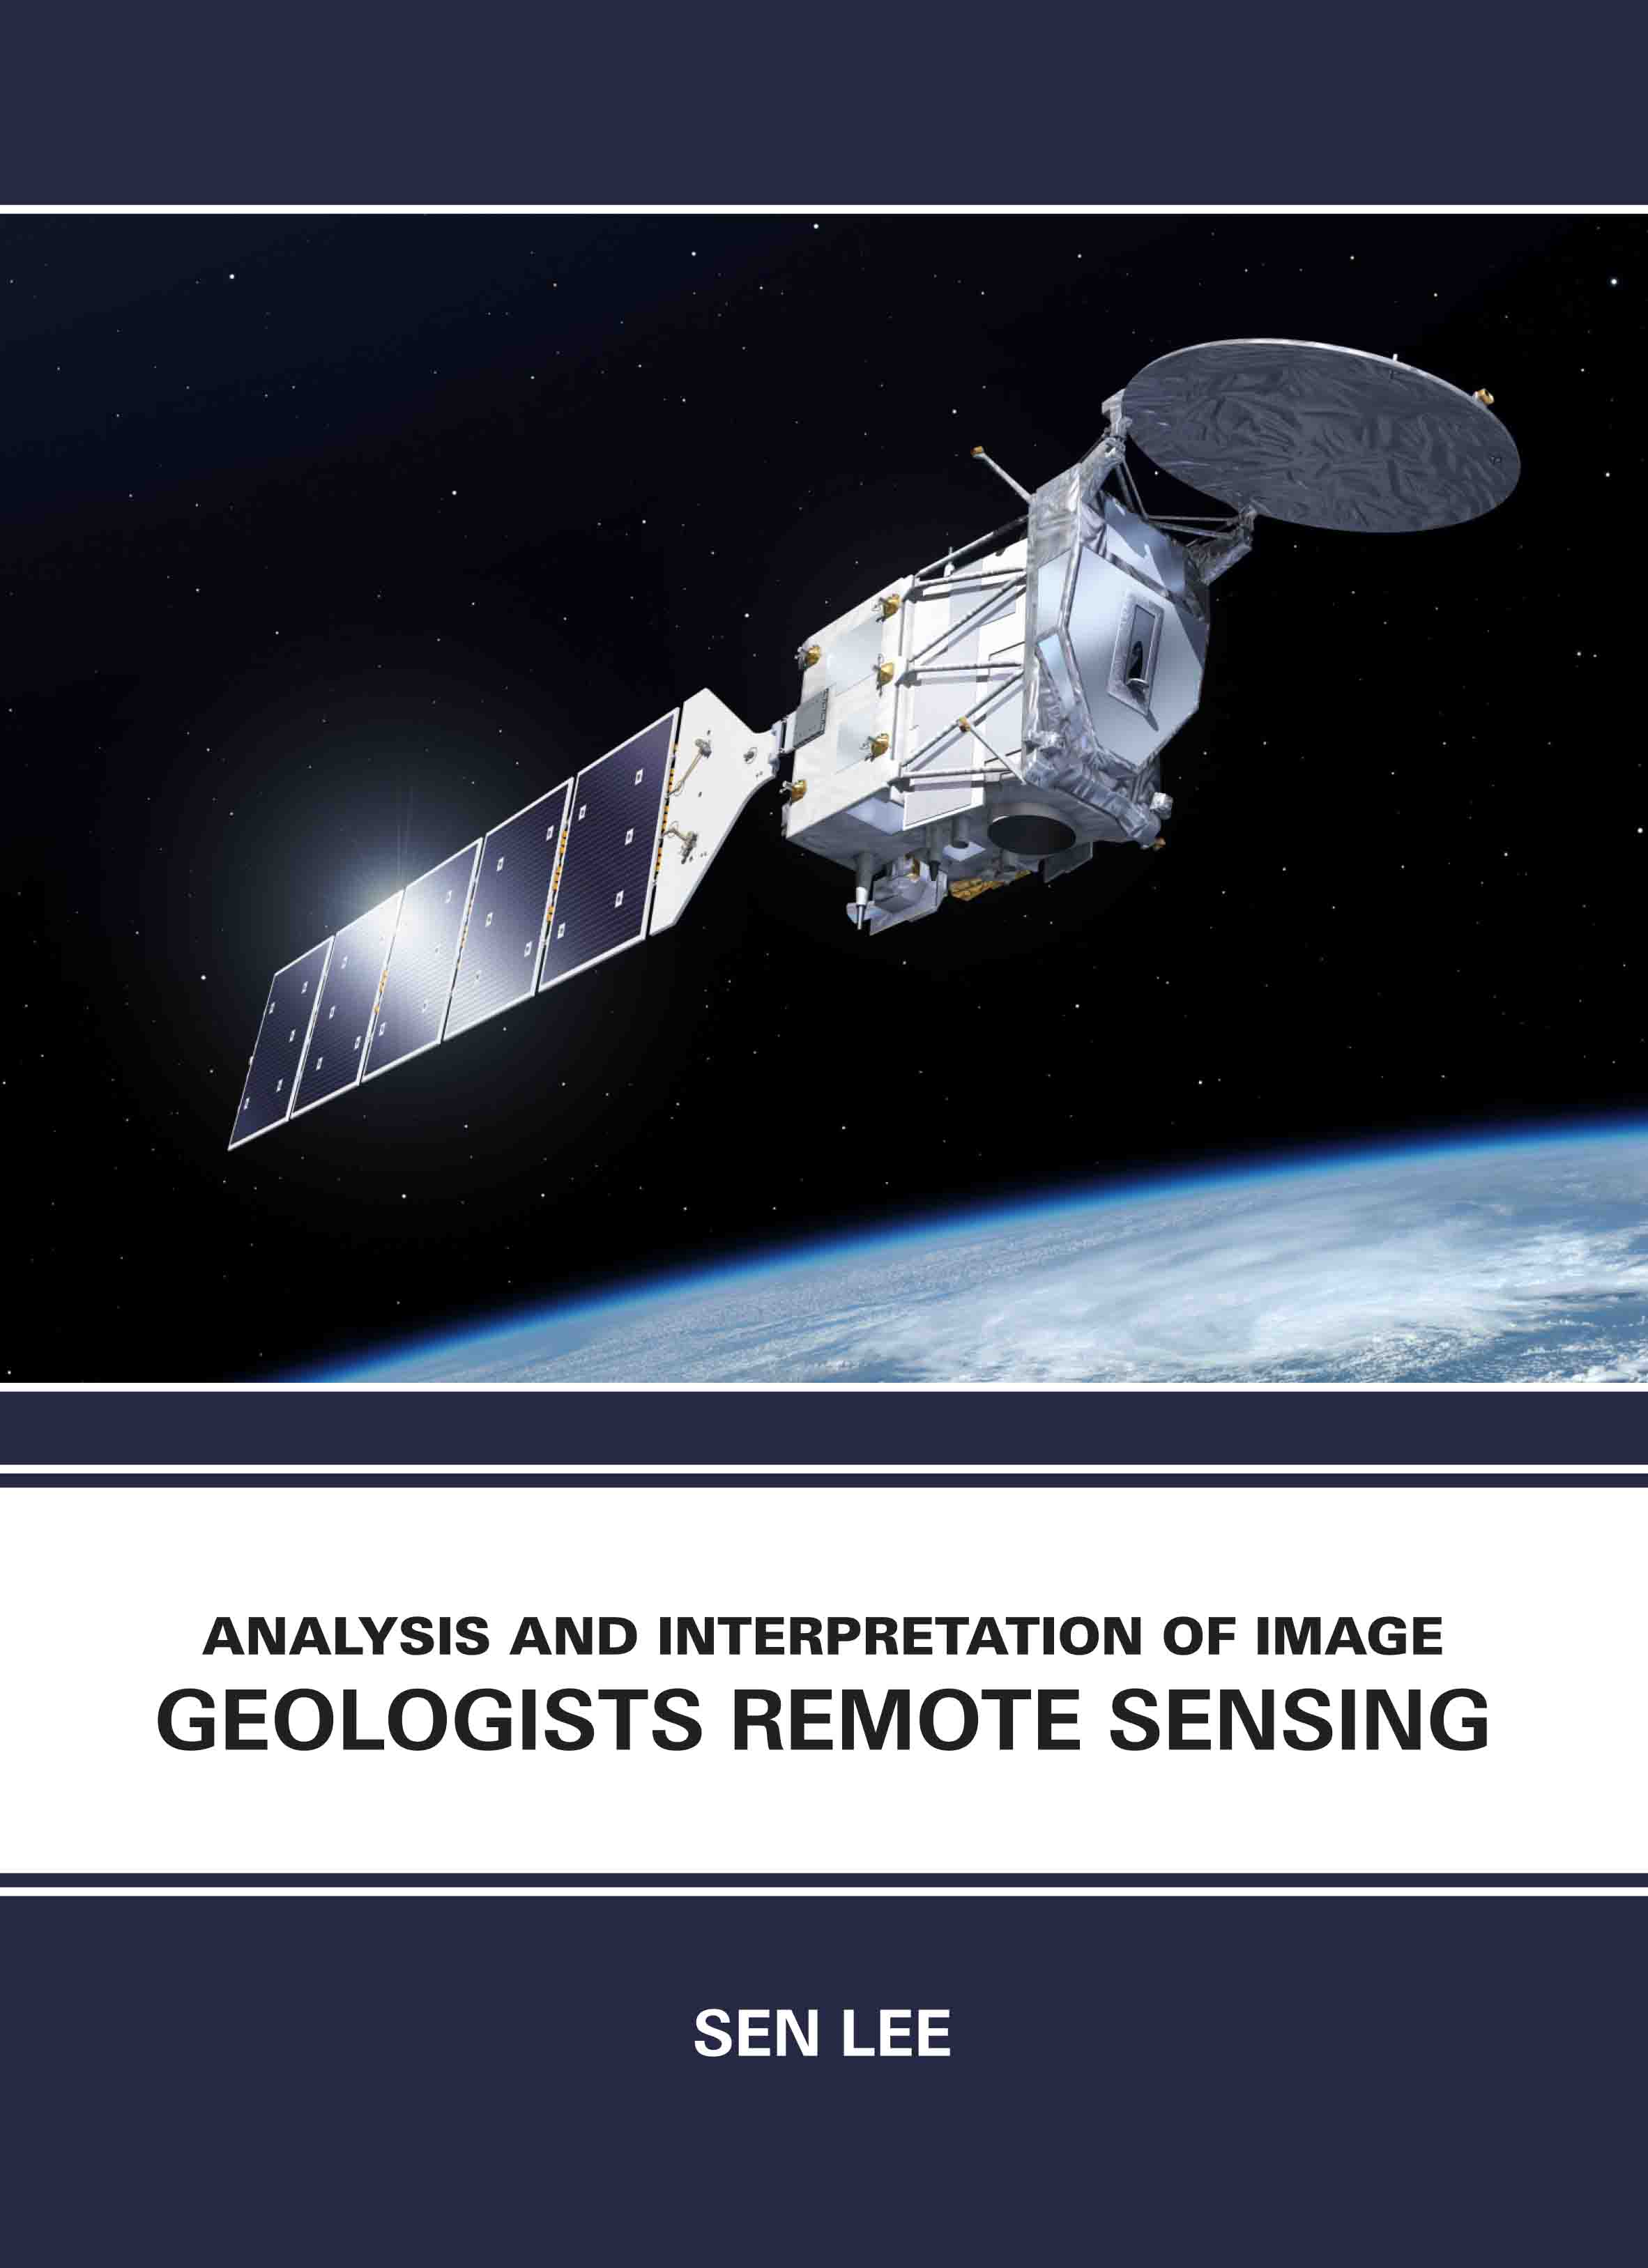 Analysis and Interpretation of Image: Geologists Remote Sensing